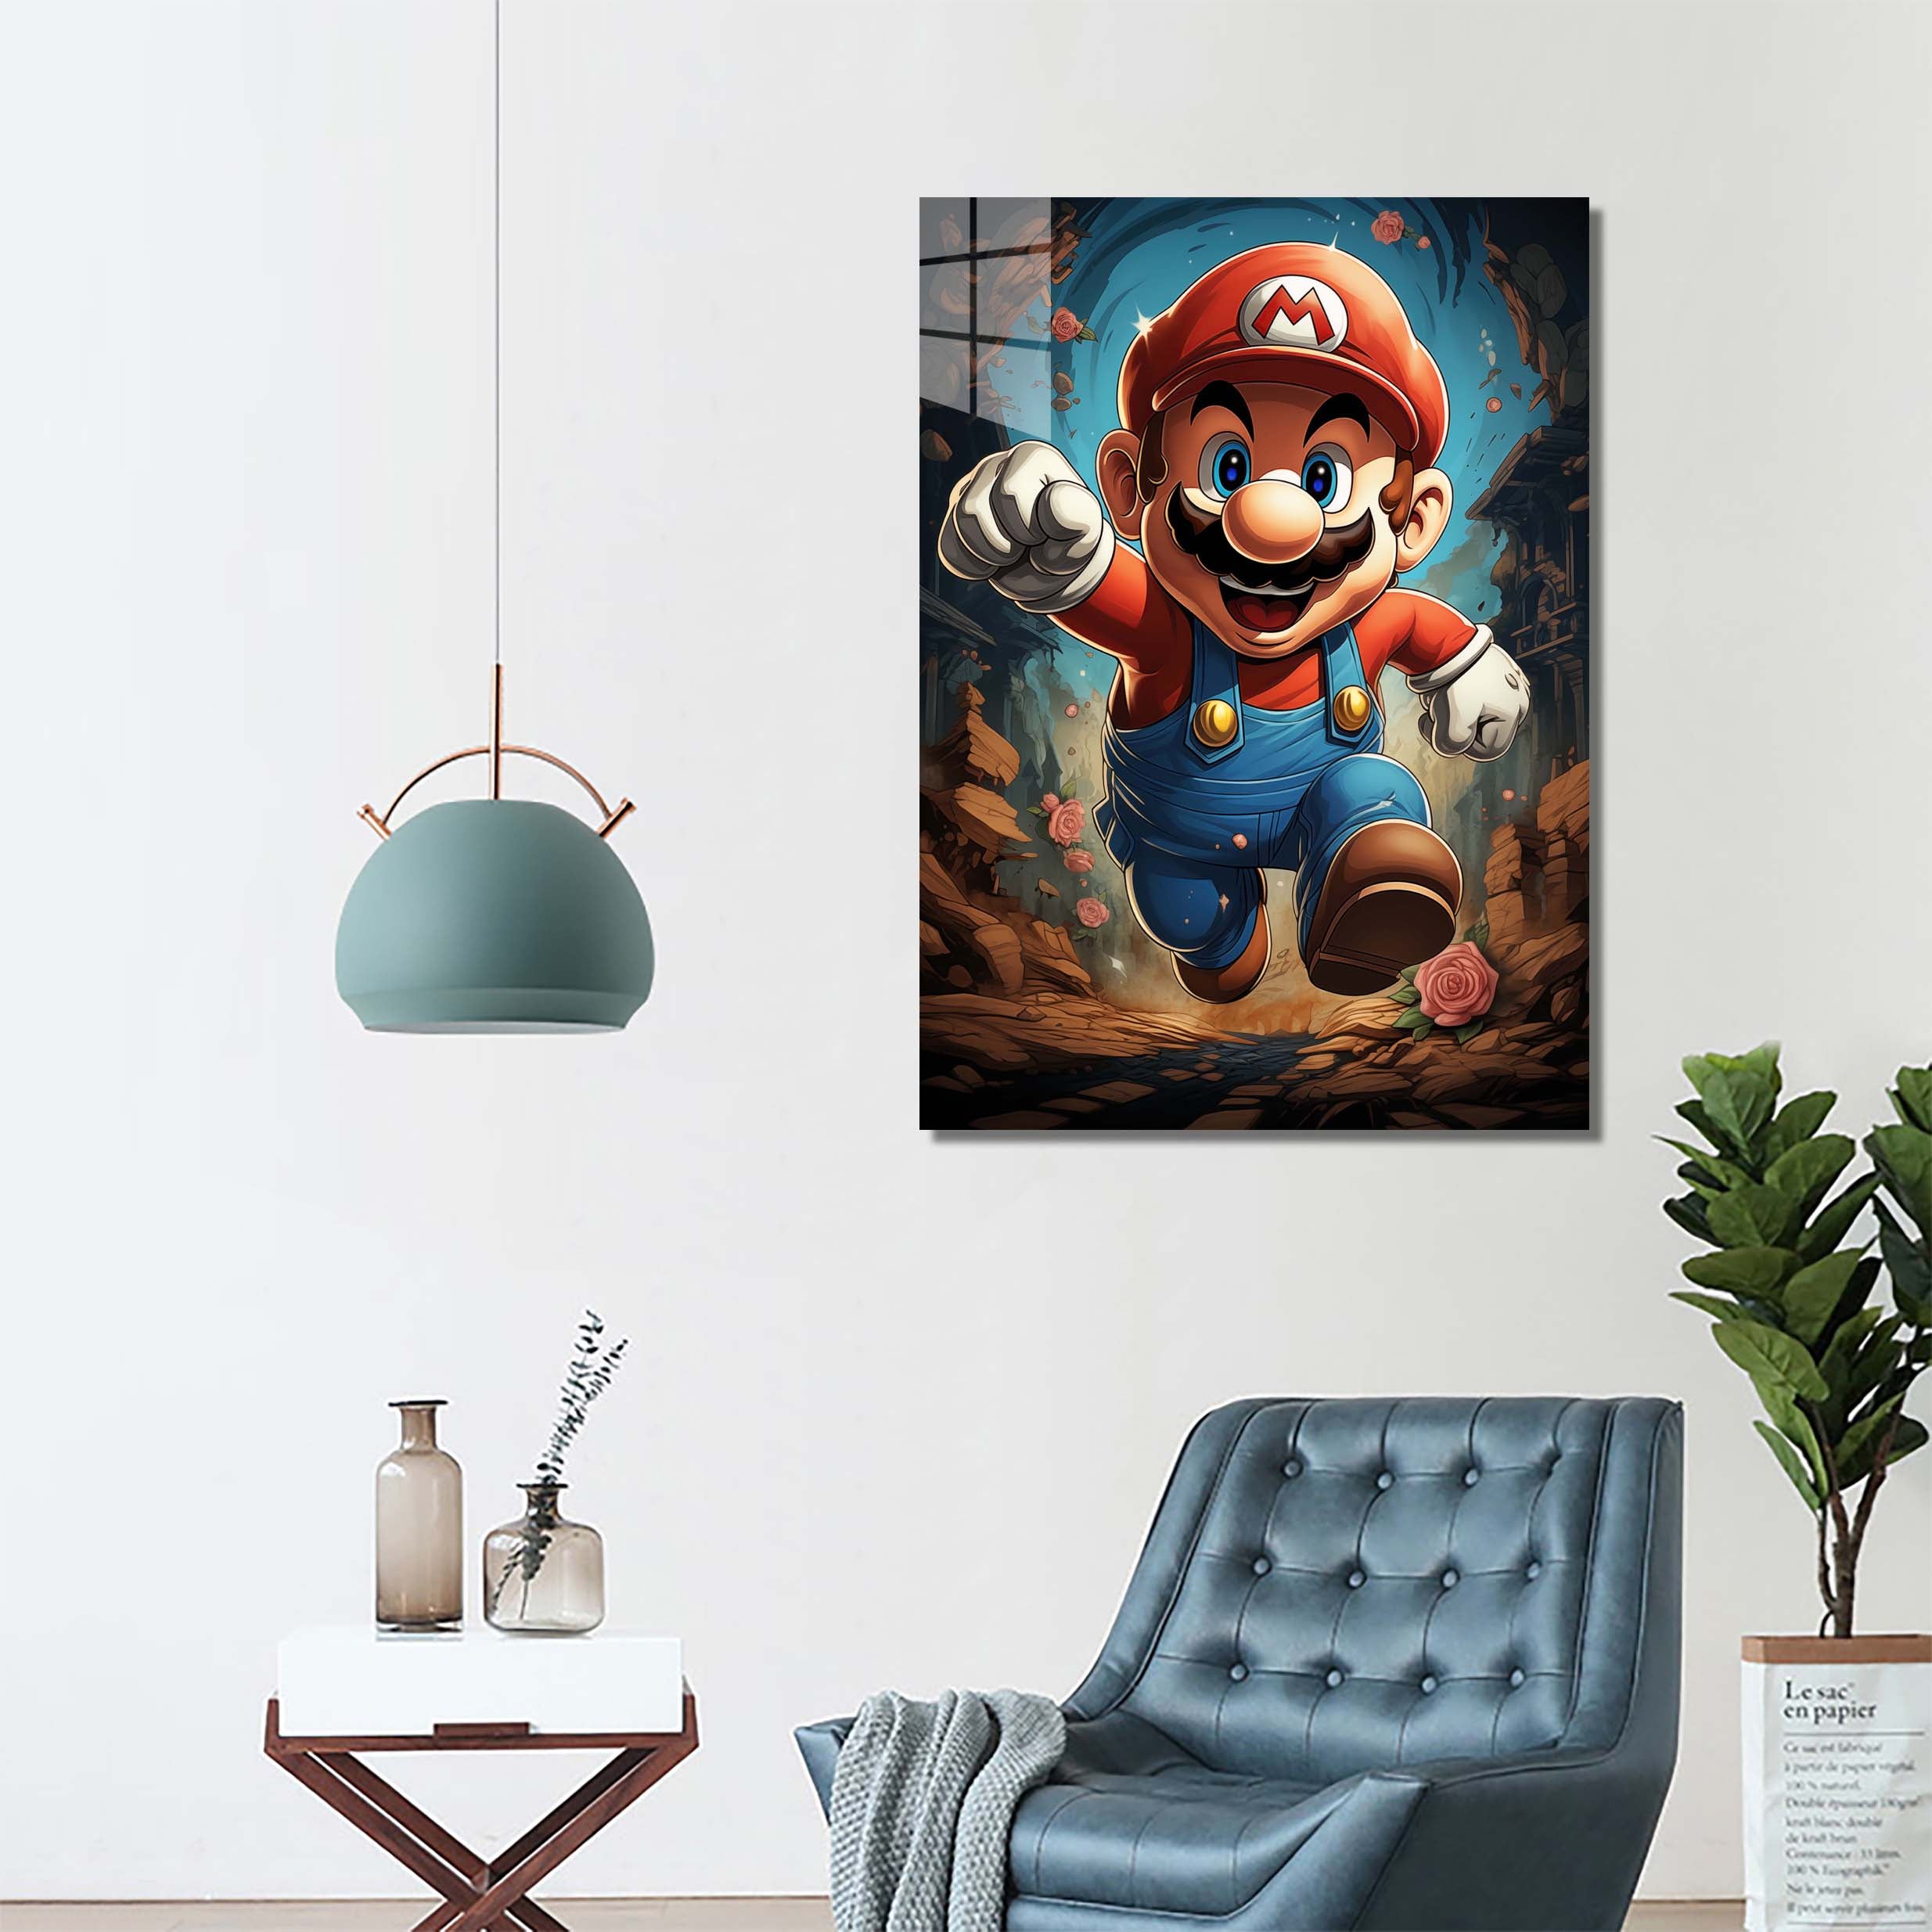 Running Mario-designed by @SAMCRO